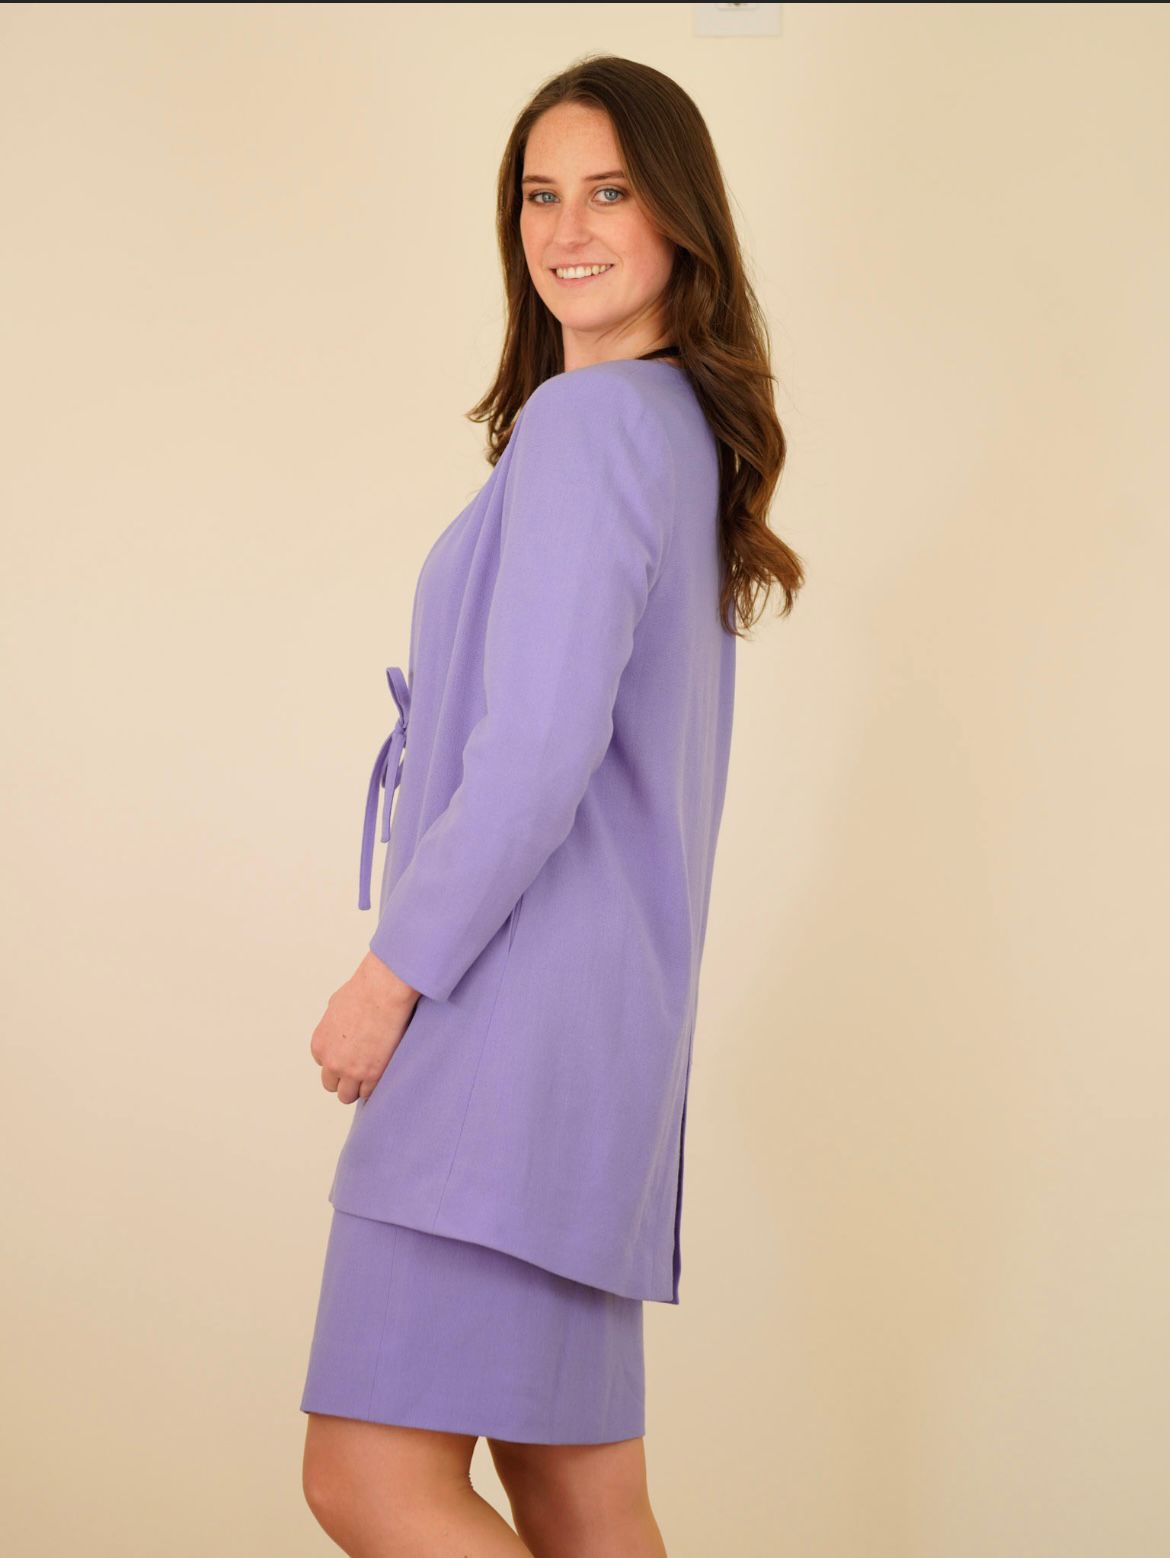 Vintage Jean Muir purple wool two piece suit size GB 12